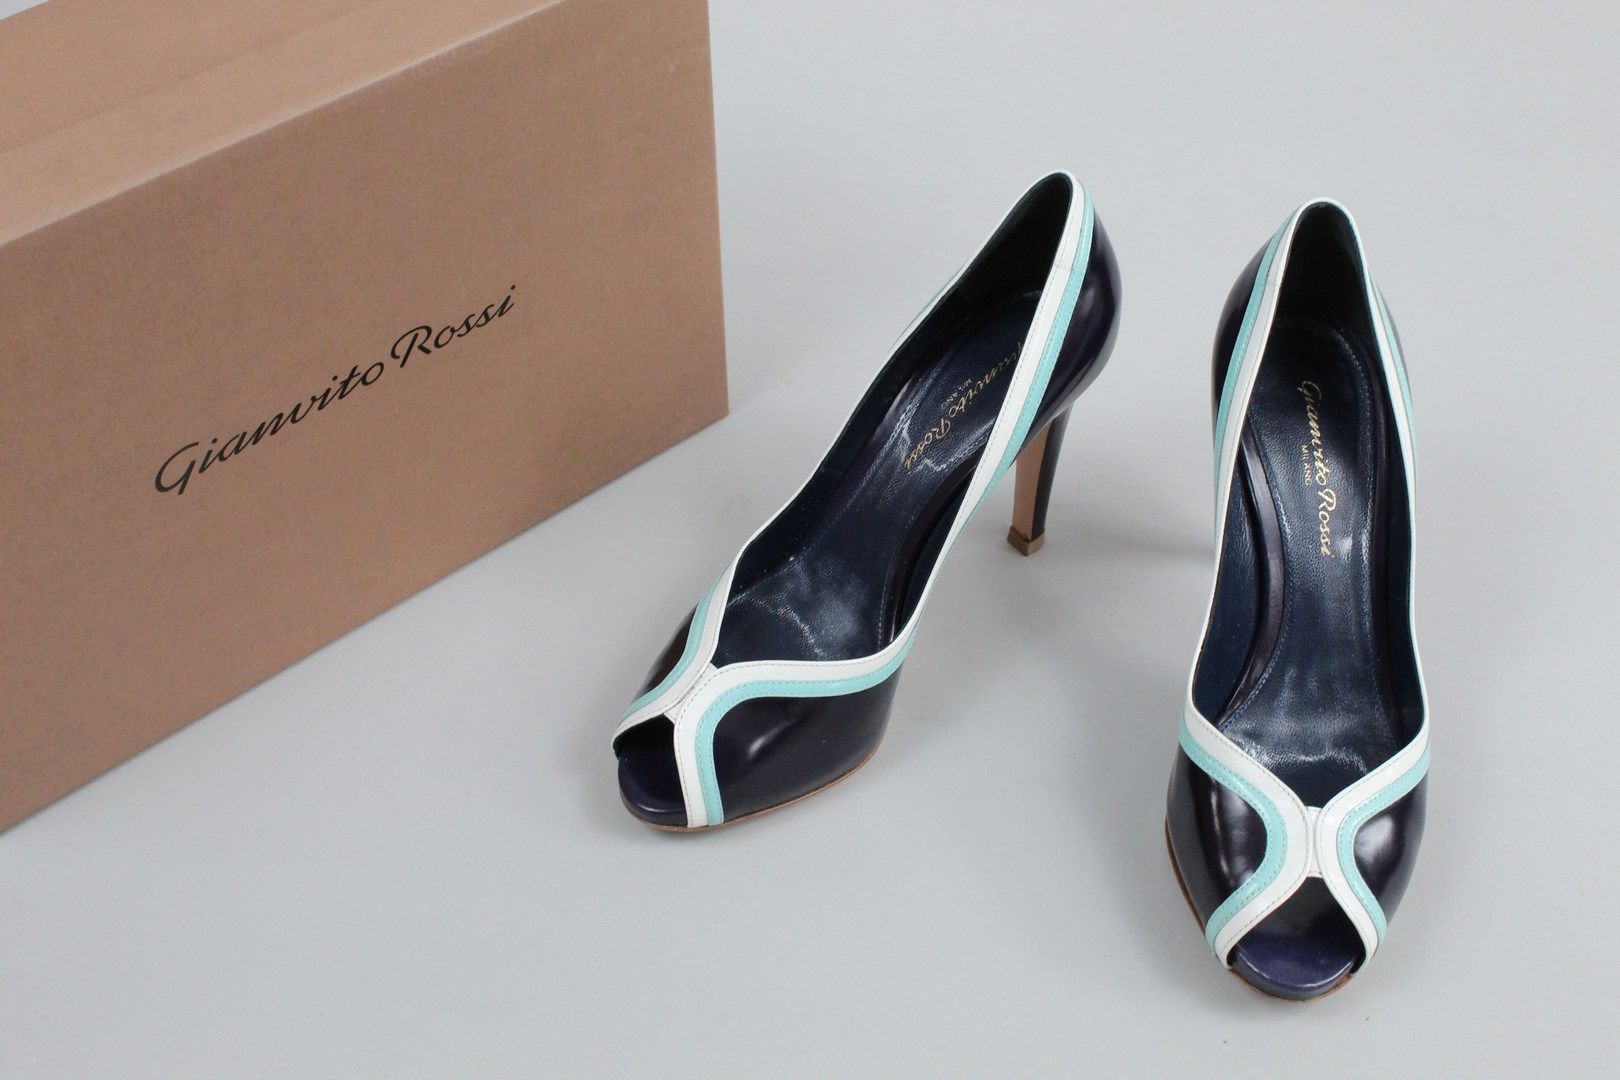 Null 吉安维托-罗西



一双午夜蓝、白色和淡蓝色釉面皮革露趾鞋。

鞋子上的几何图案。



尺寸：36



鞋跟高度：9厘米



带盒